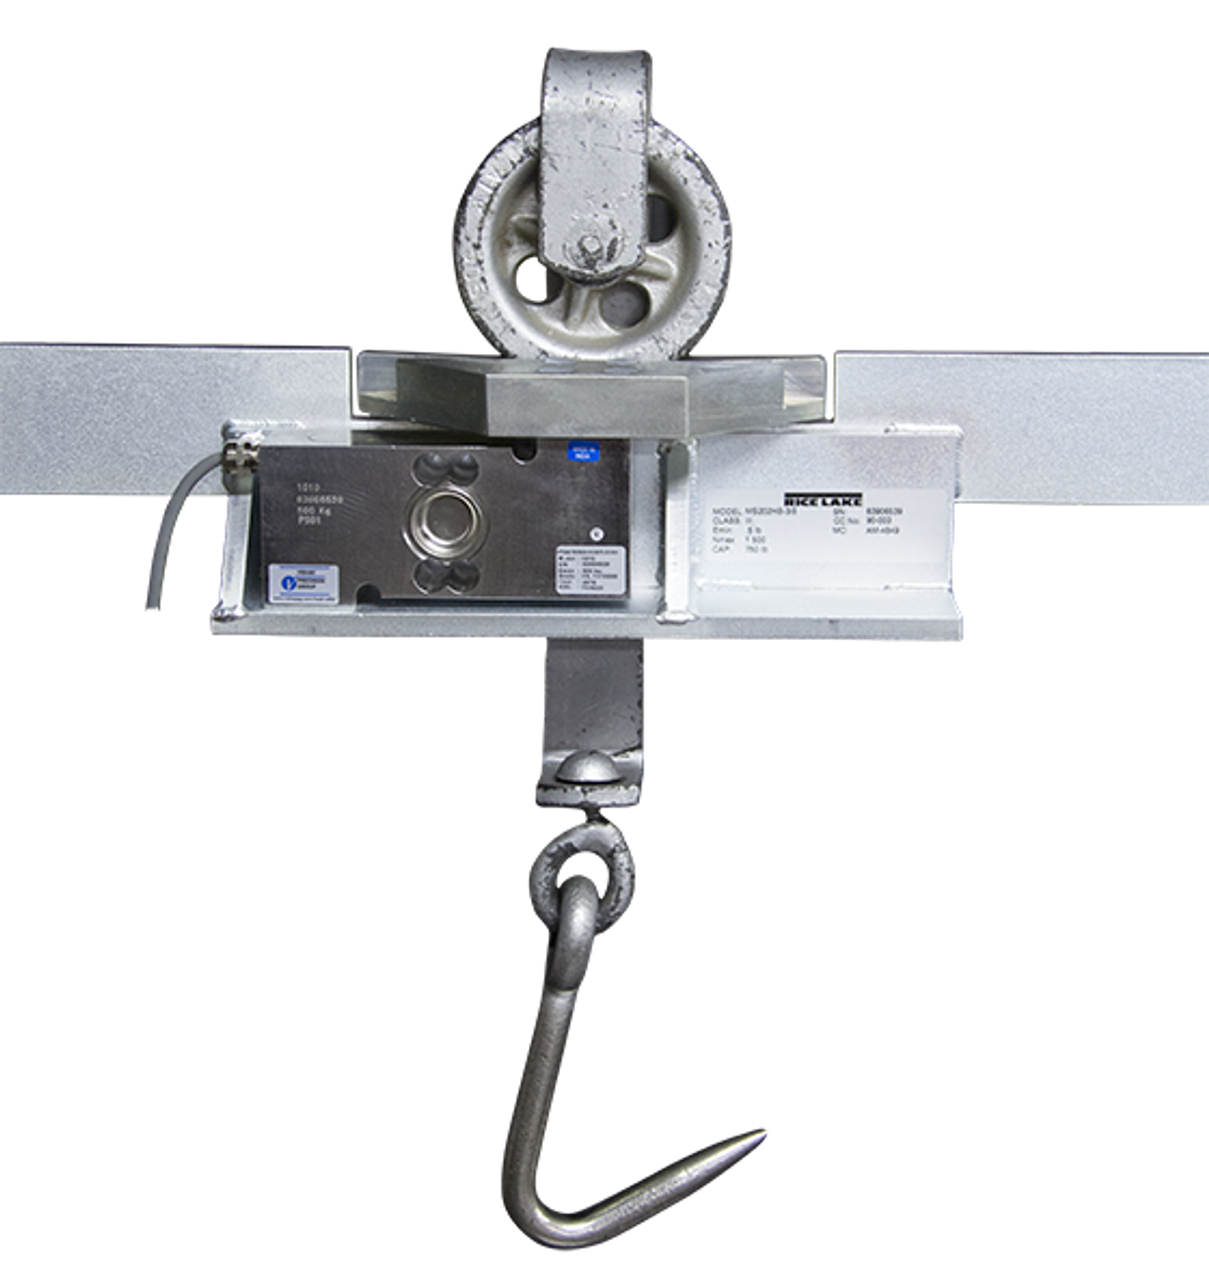 Rice Lake RL1200 Mechanical Portable Beam Scale, 1000 x 0.5 lb, NTEP